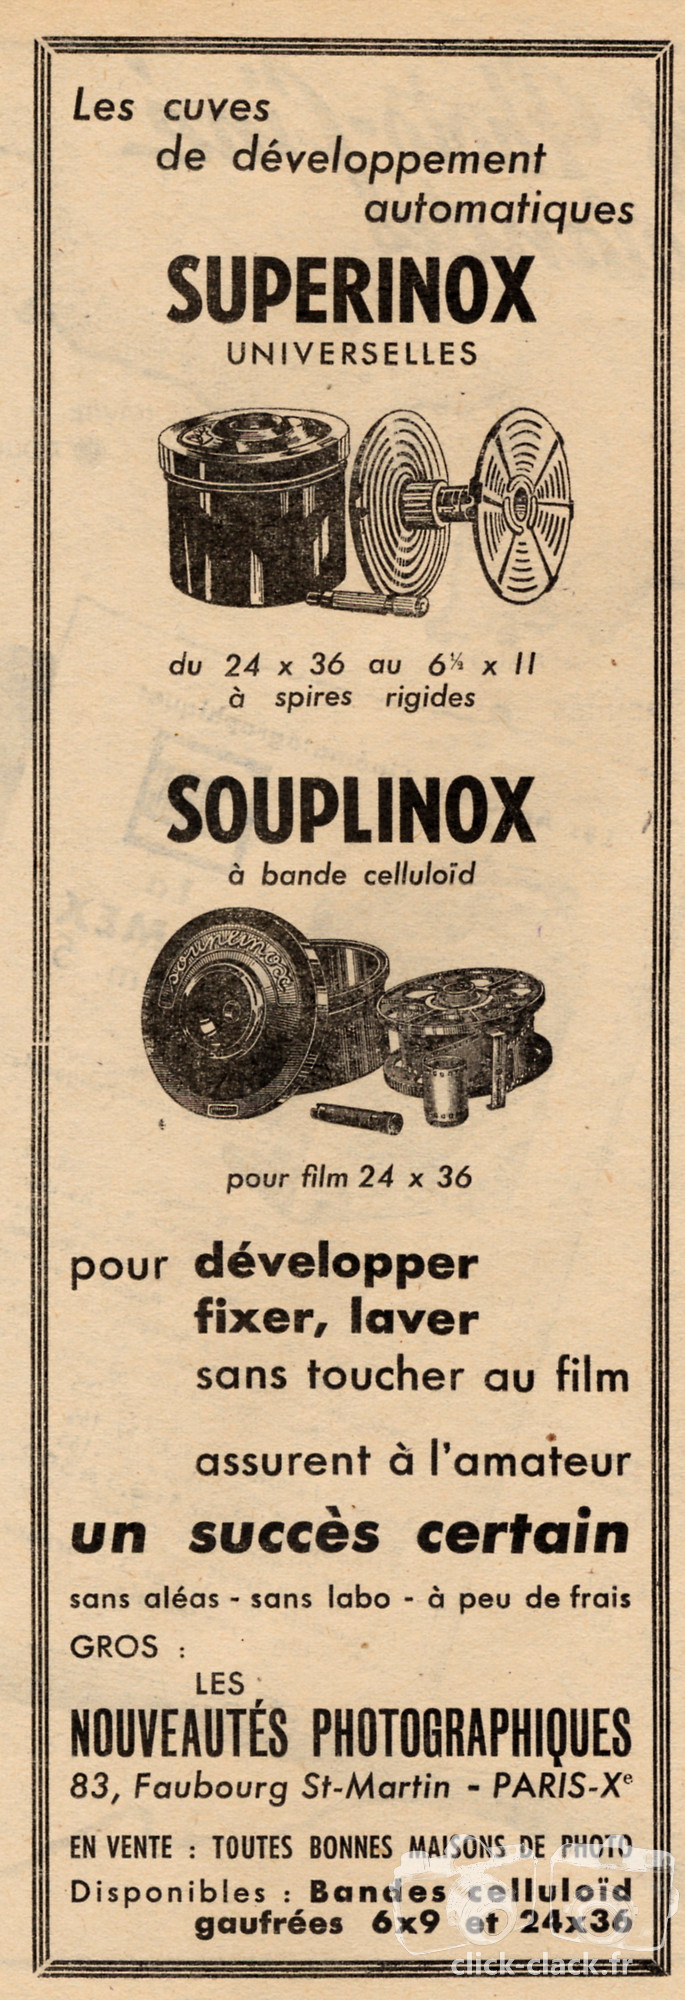 Inox - Cuve Superinox, Cuve Souplinox - 1948